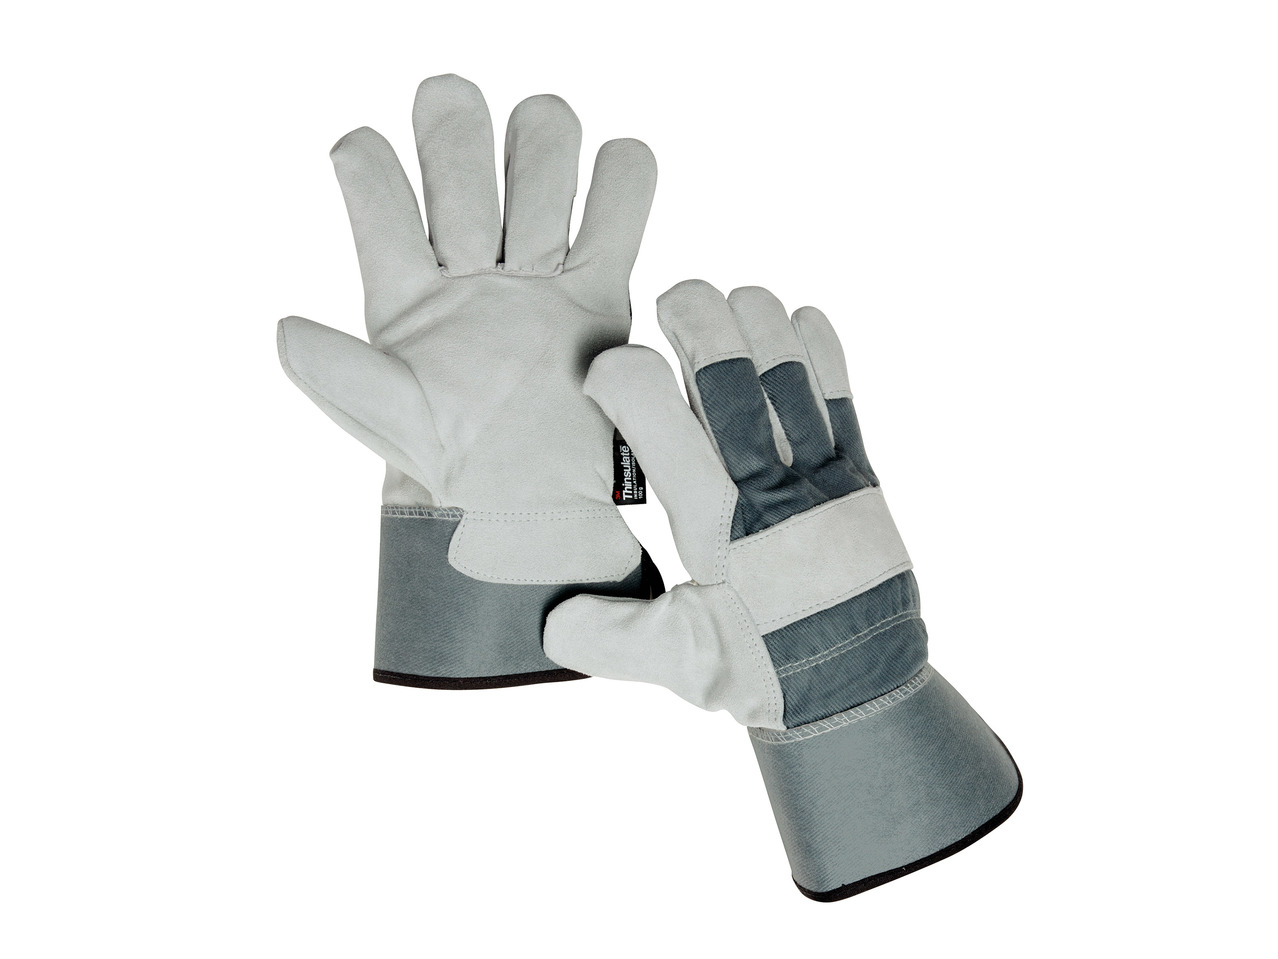 Powerfix Profi Work Gloves1